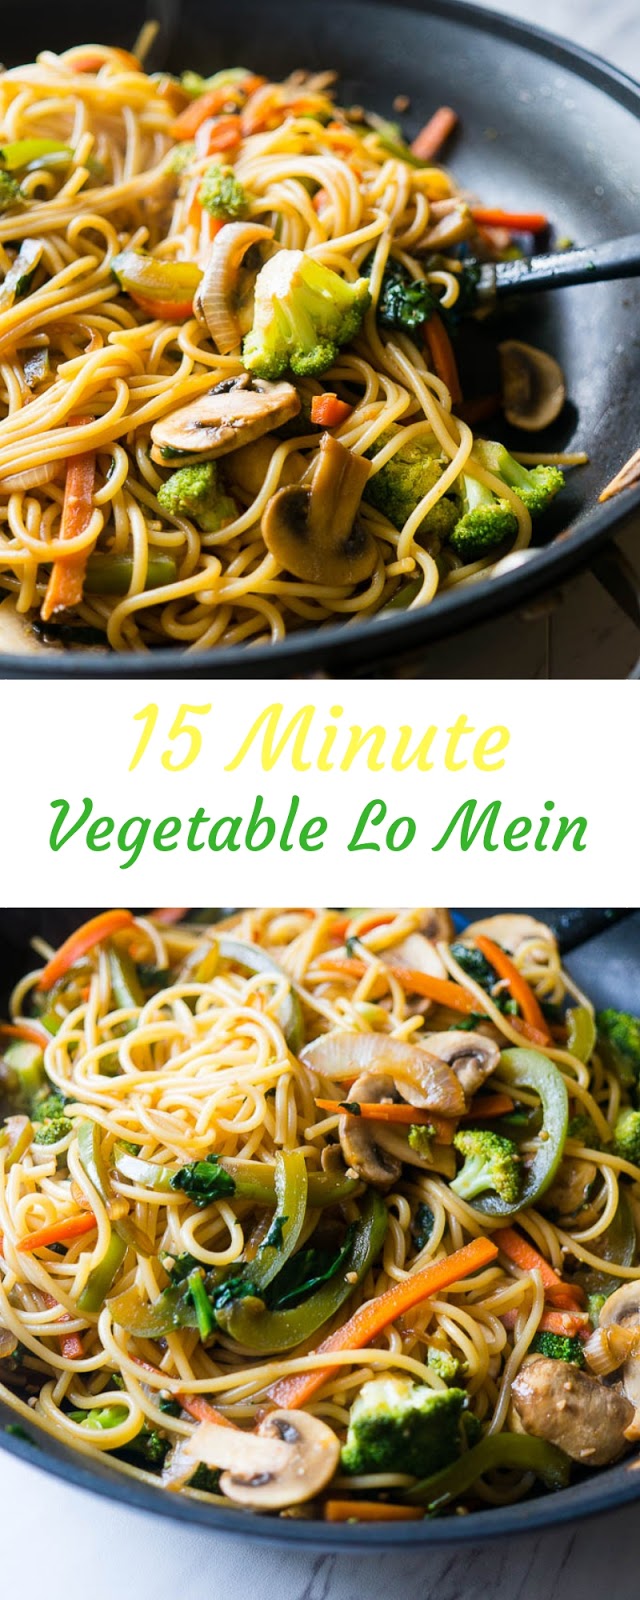 15 Minute Vegetable Lo Mein | Salty Sweet Recipes